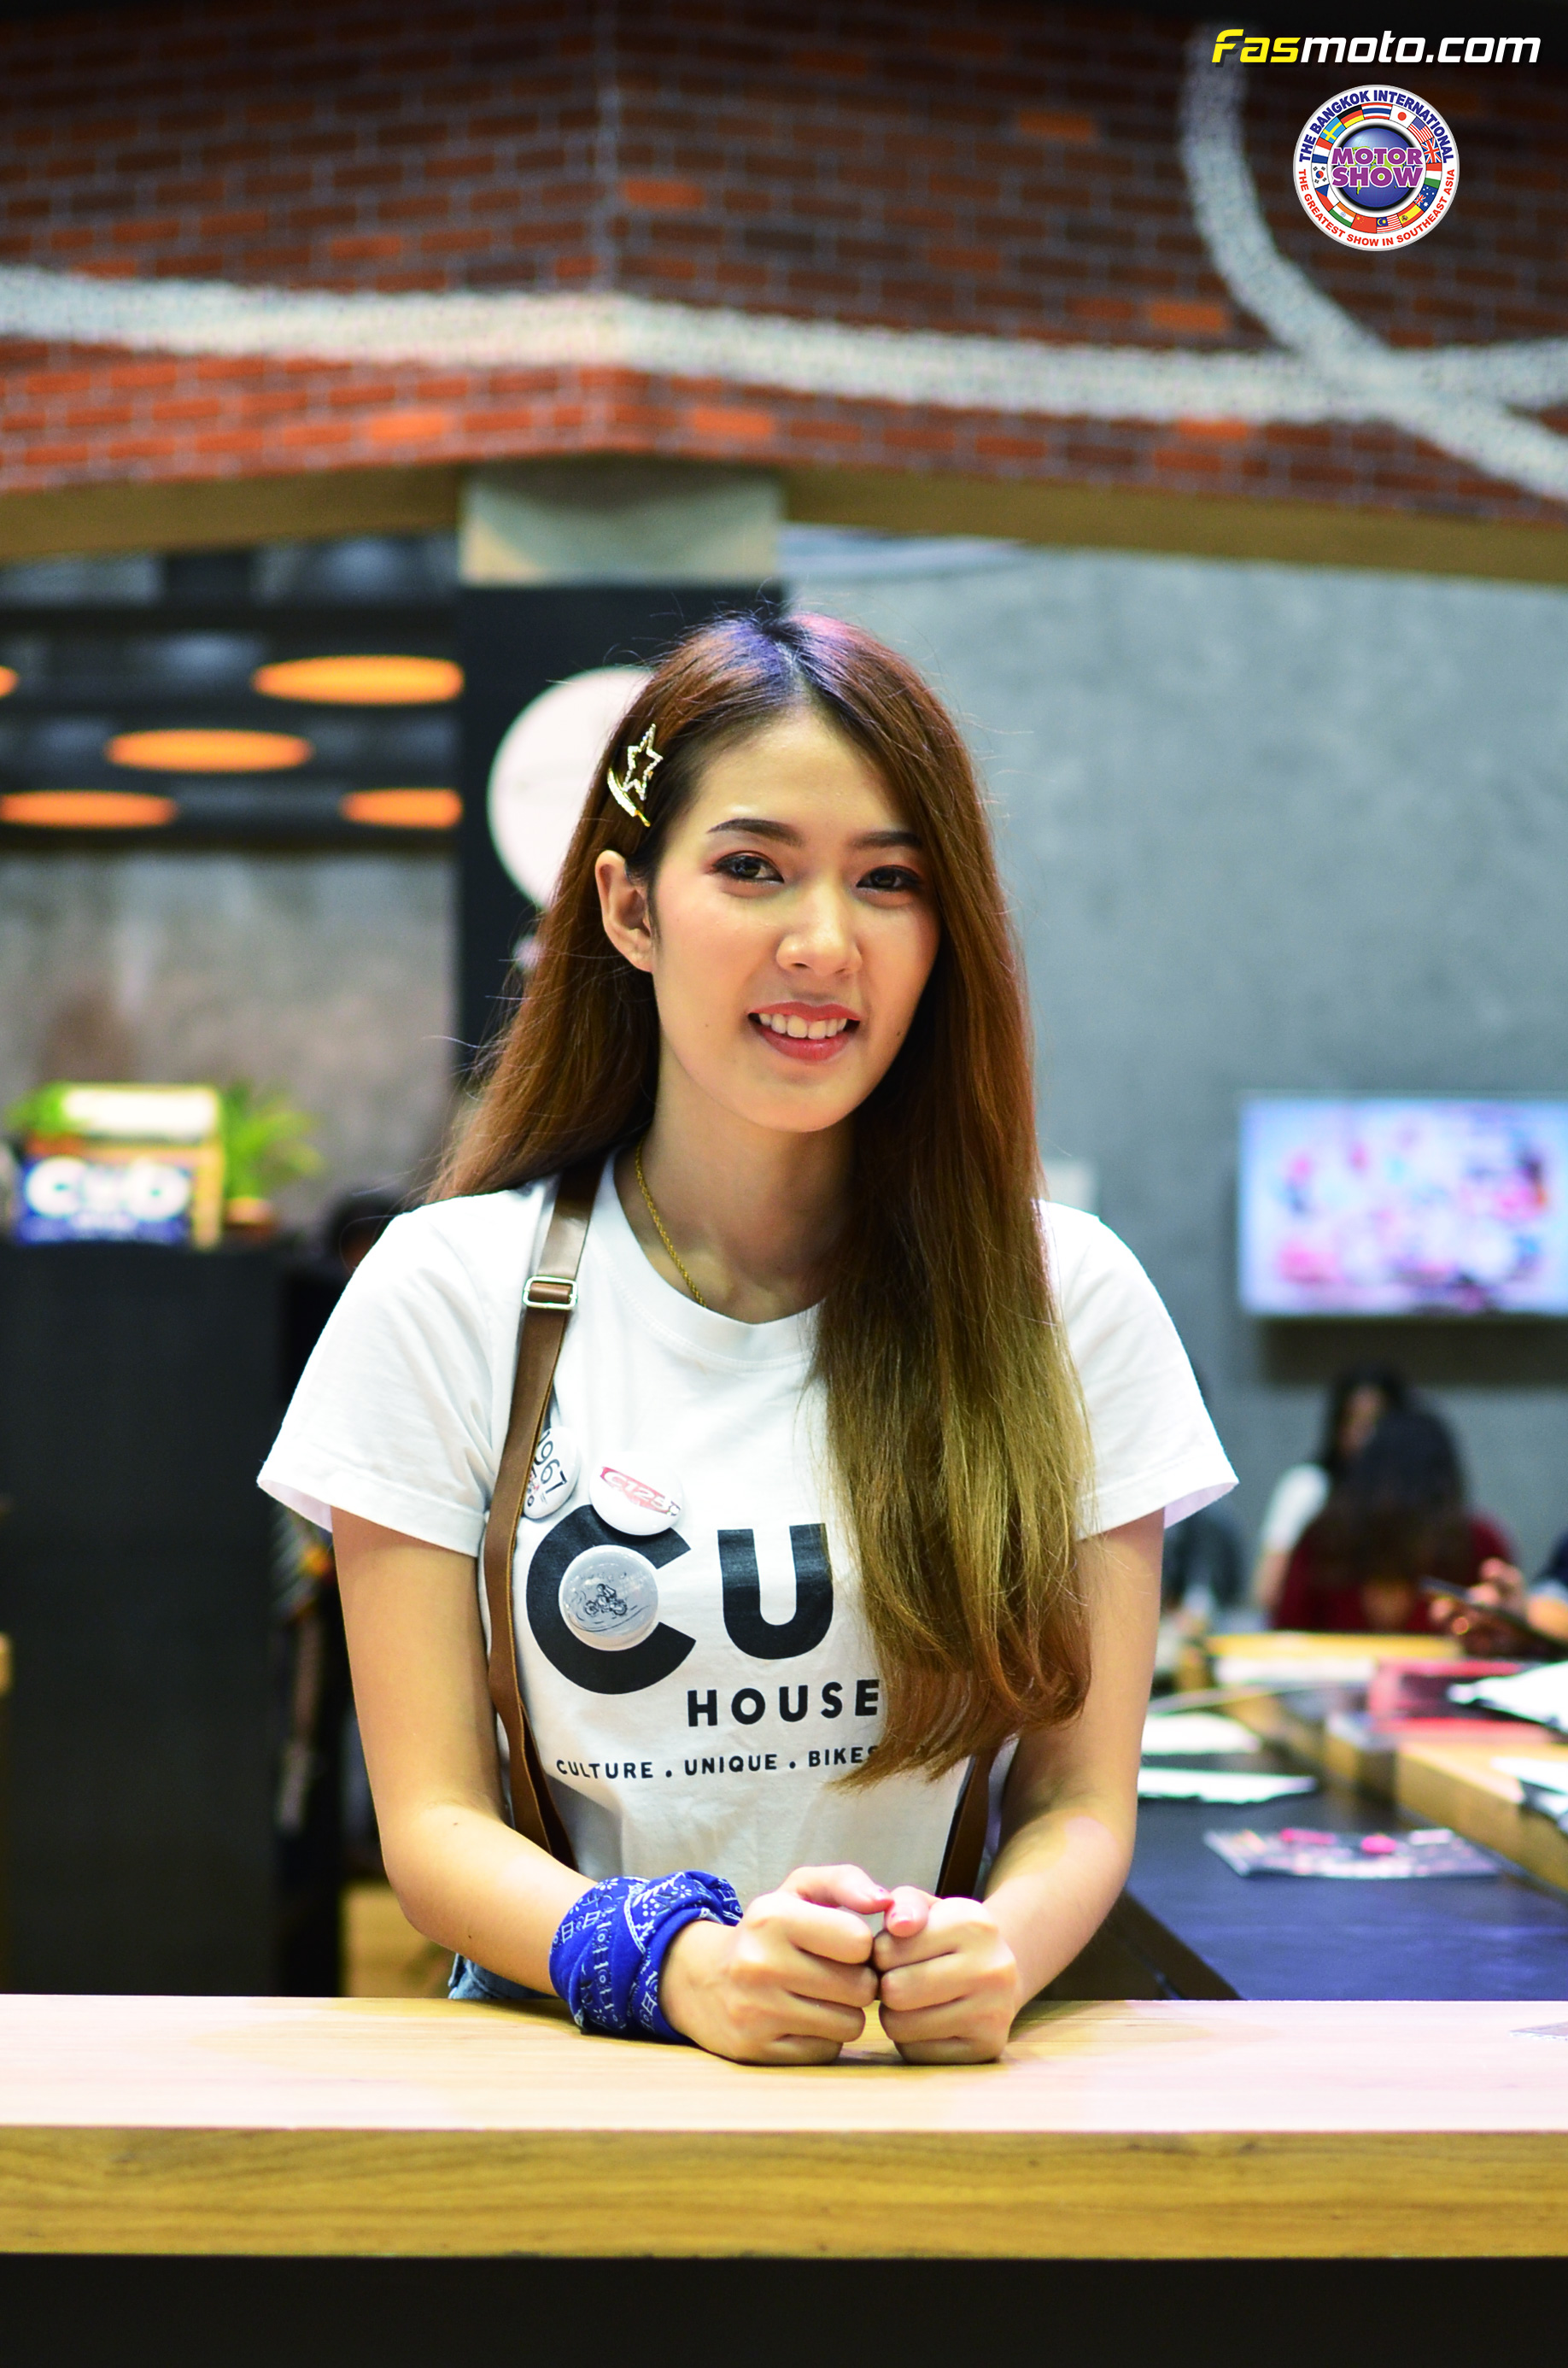 The Bangkok Motor Show 2019 - Show Girls - Cub House